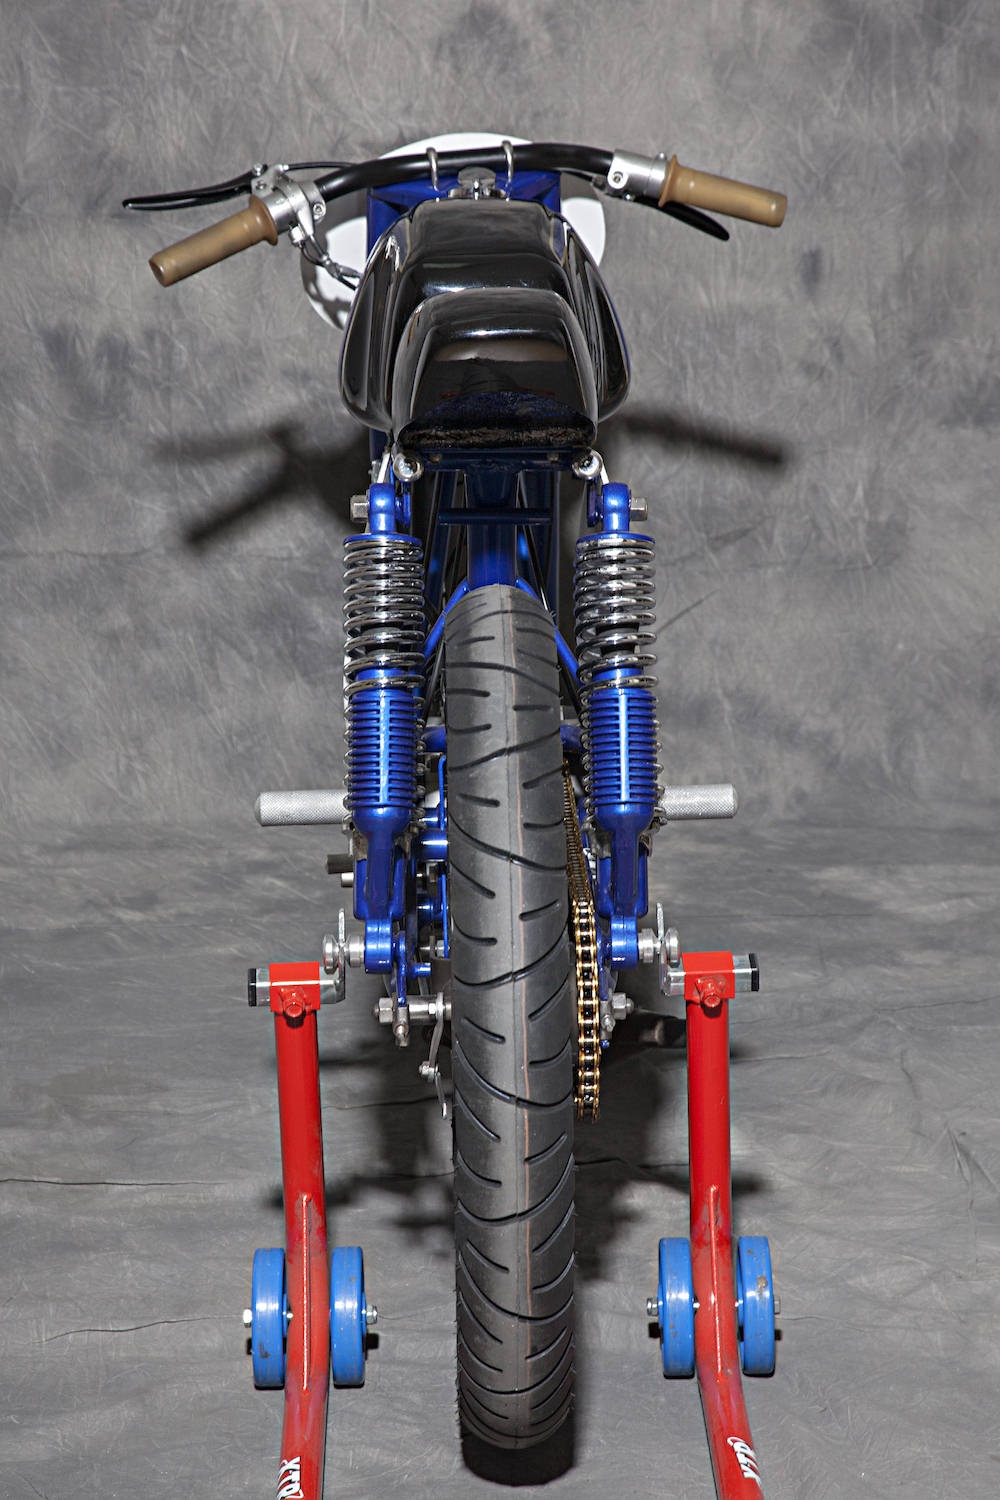 XTR Pepo: кастом Ducati 48 Rapido